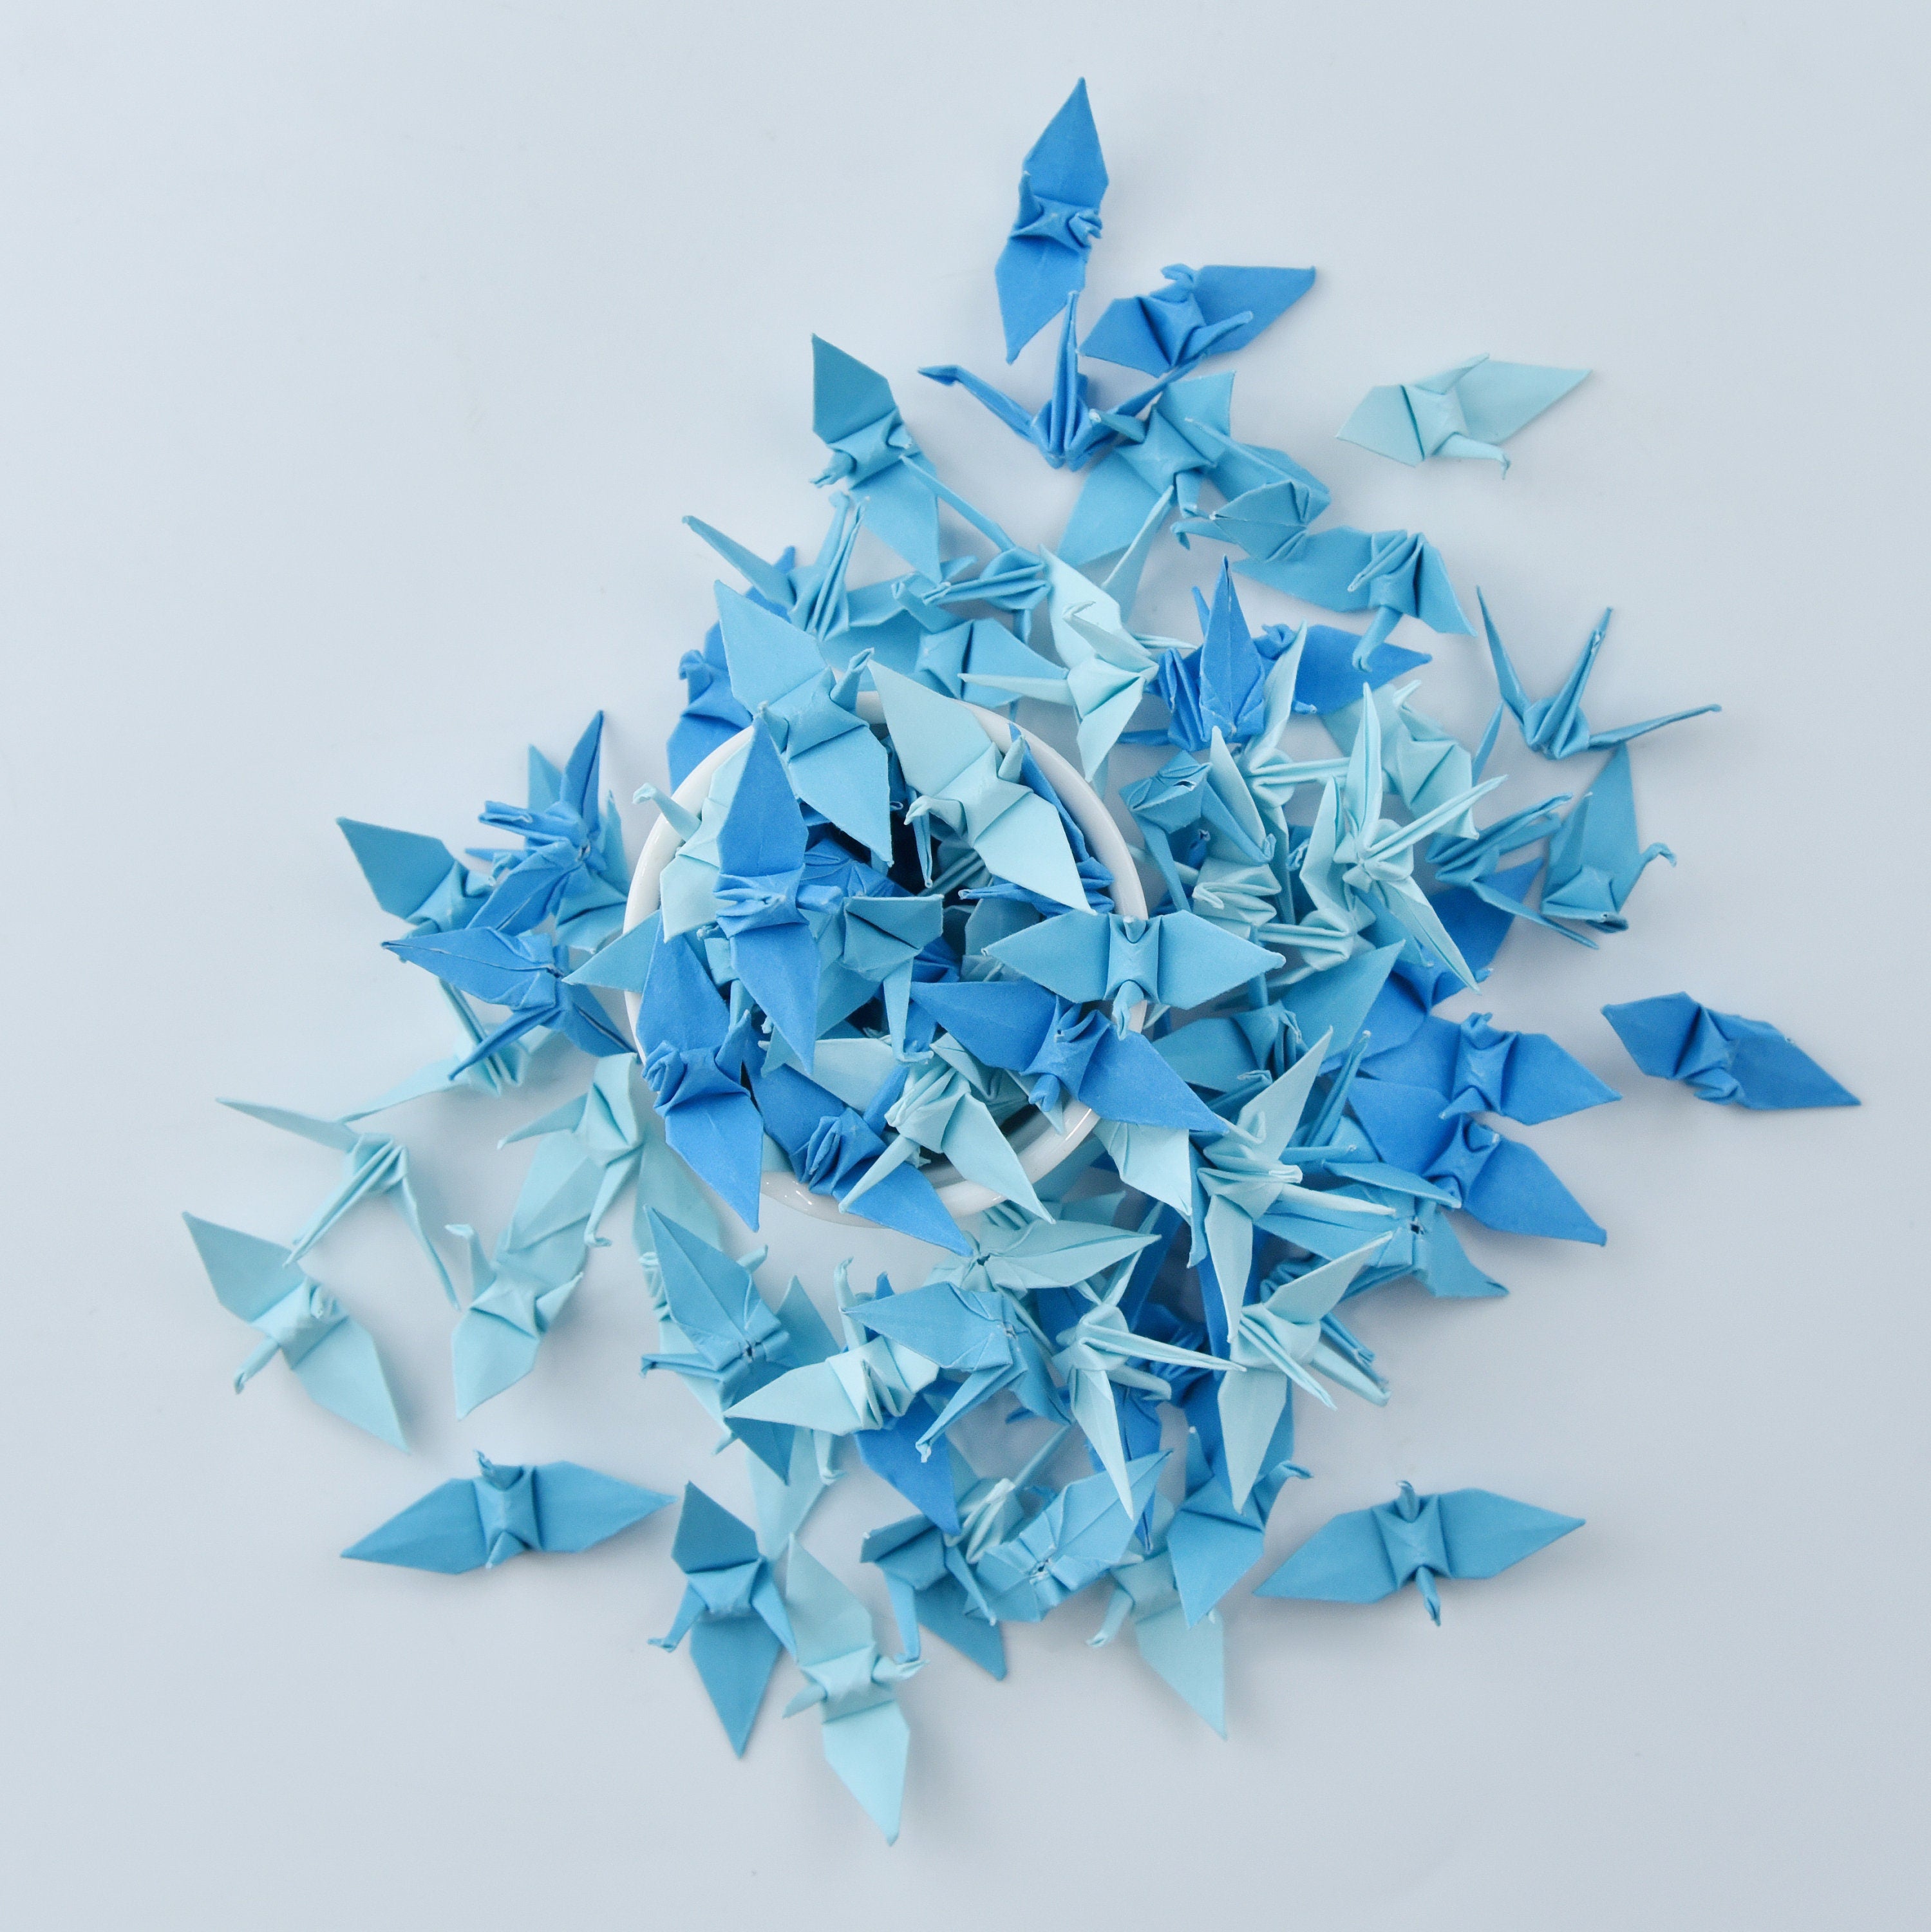 100 grullas de papel de origami de sombra azul - pequeñas 1,5x1,5 pulgadas - grullas de origami plegadas - regalo de boda, decoración, telón de fondo de boda